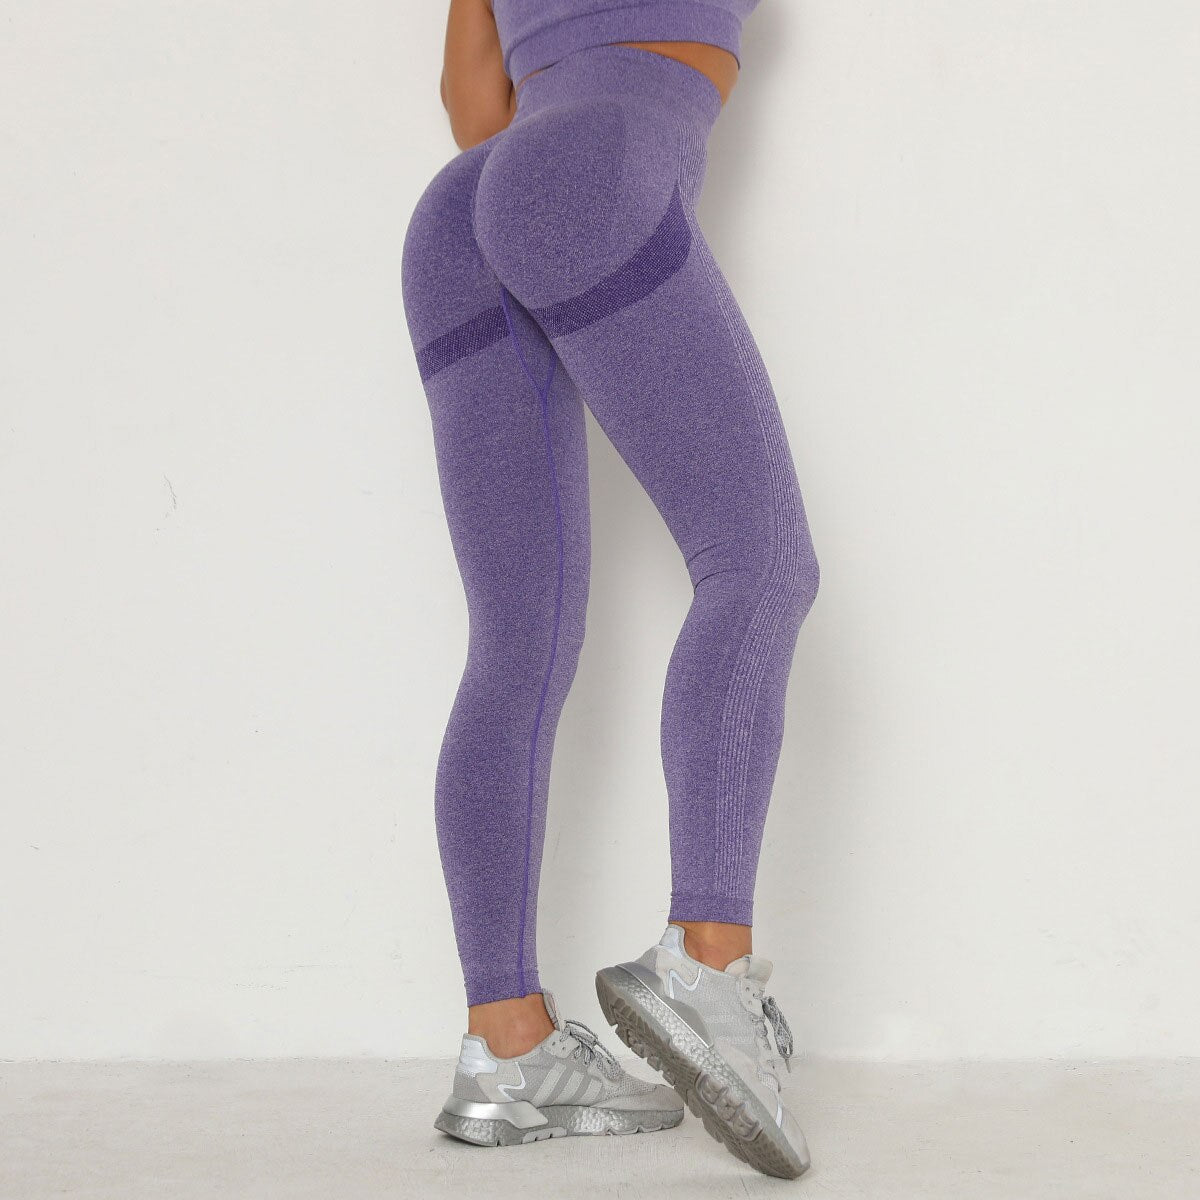 Mojoyce Gym Sport Leggings Women Seamless Yoga Pants Fitness Push Up High Waist Tights Workout Running Training Scrunch Leggings Pants